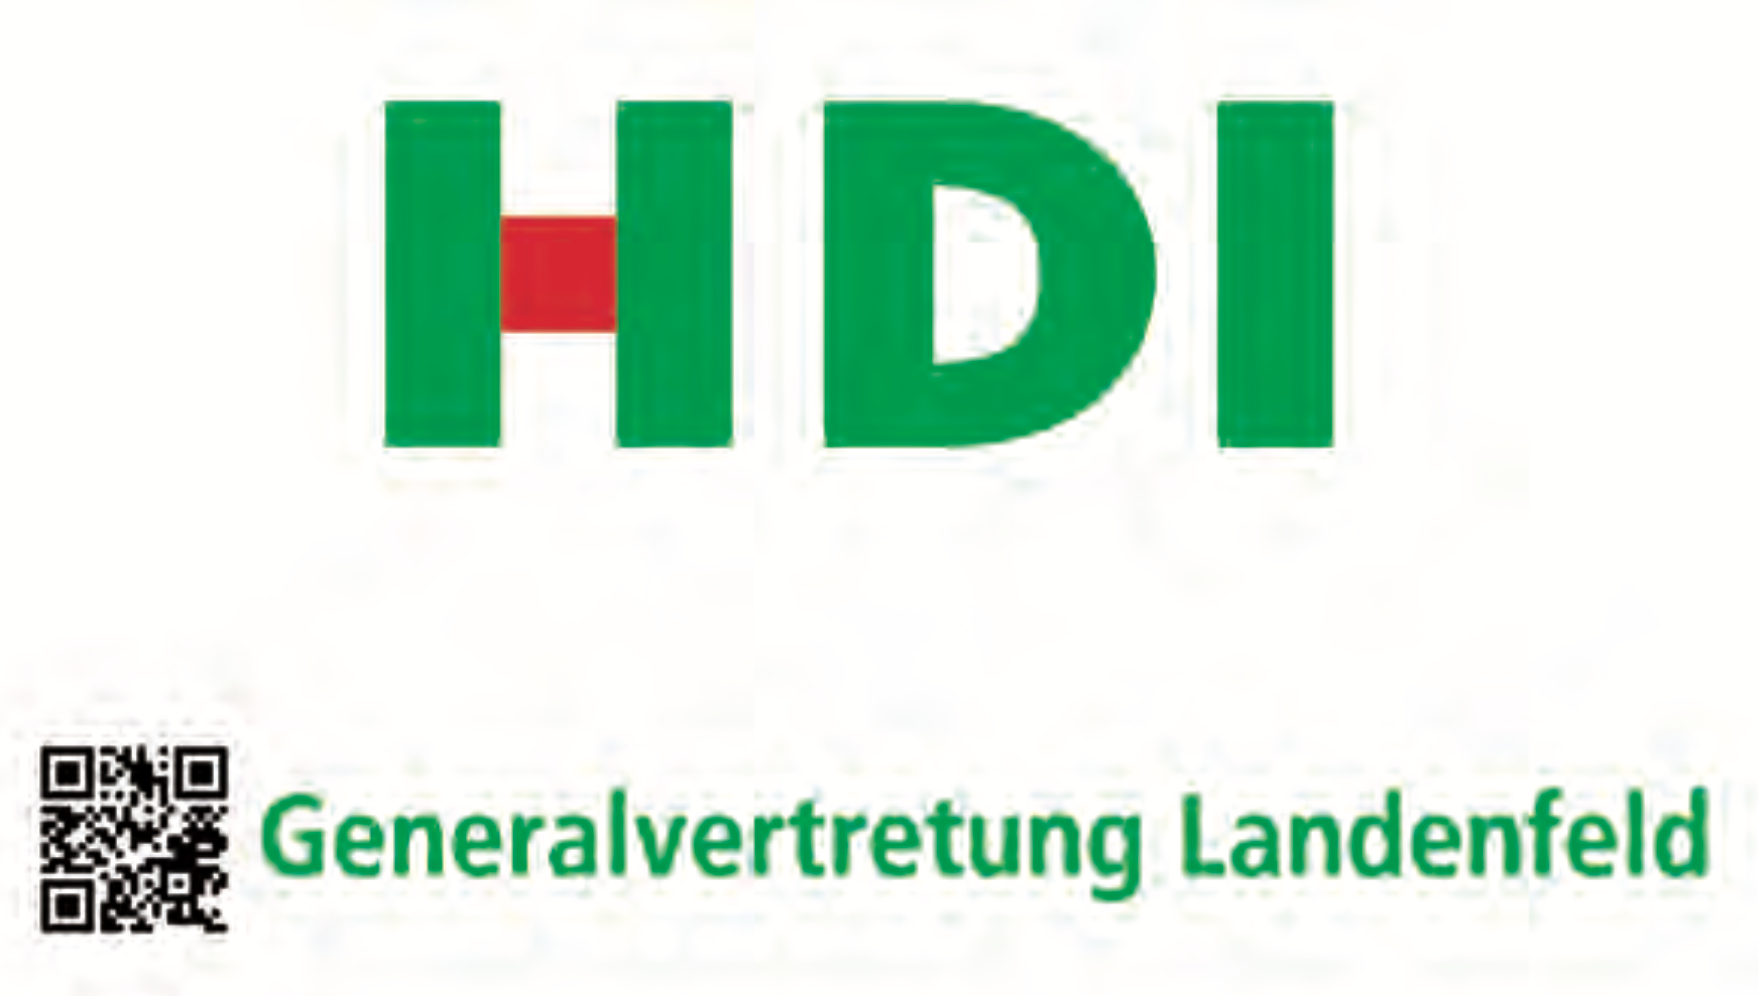 HDI Generalagentur Landenfeld